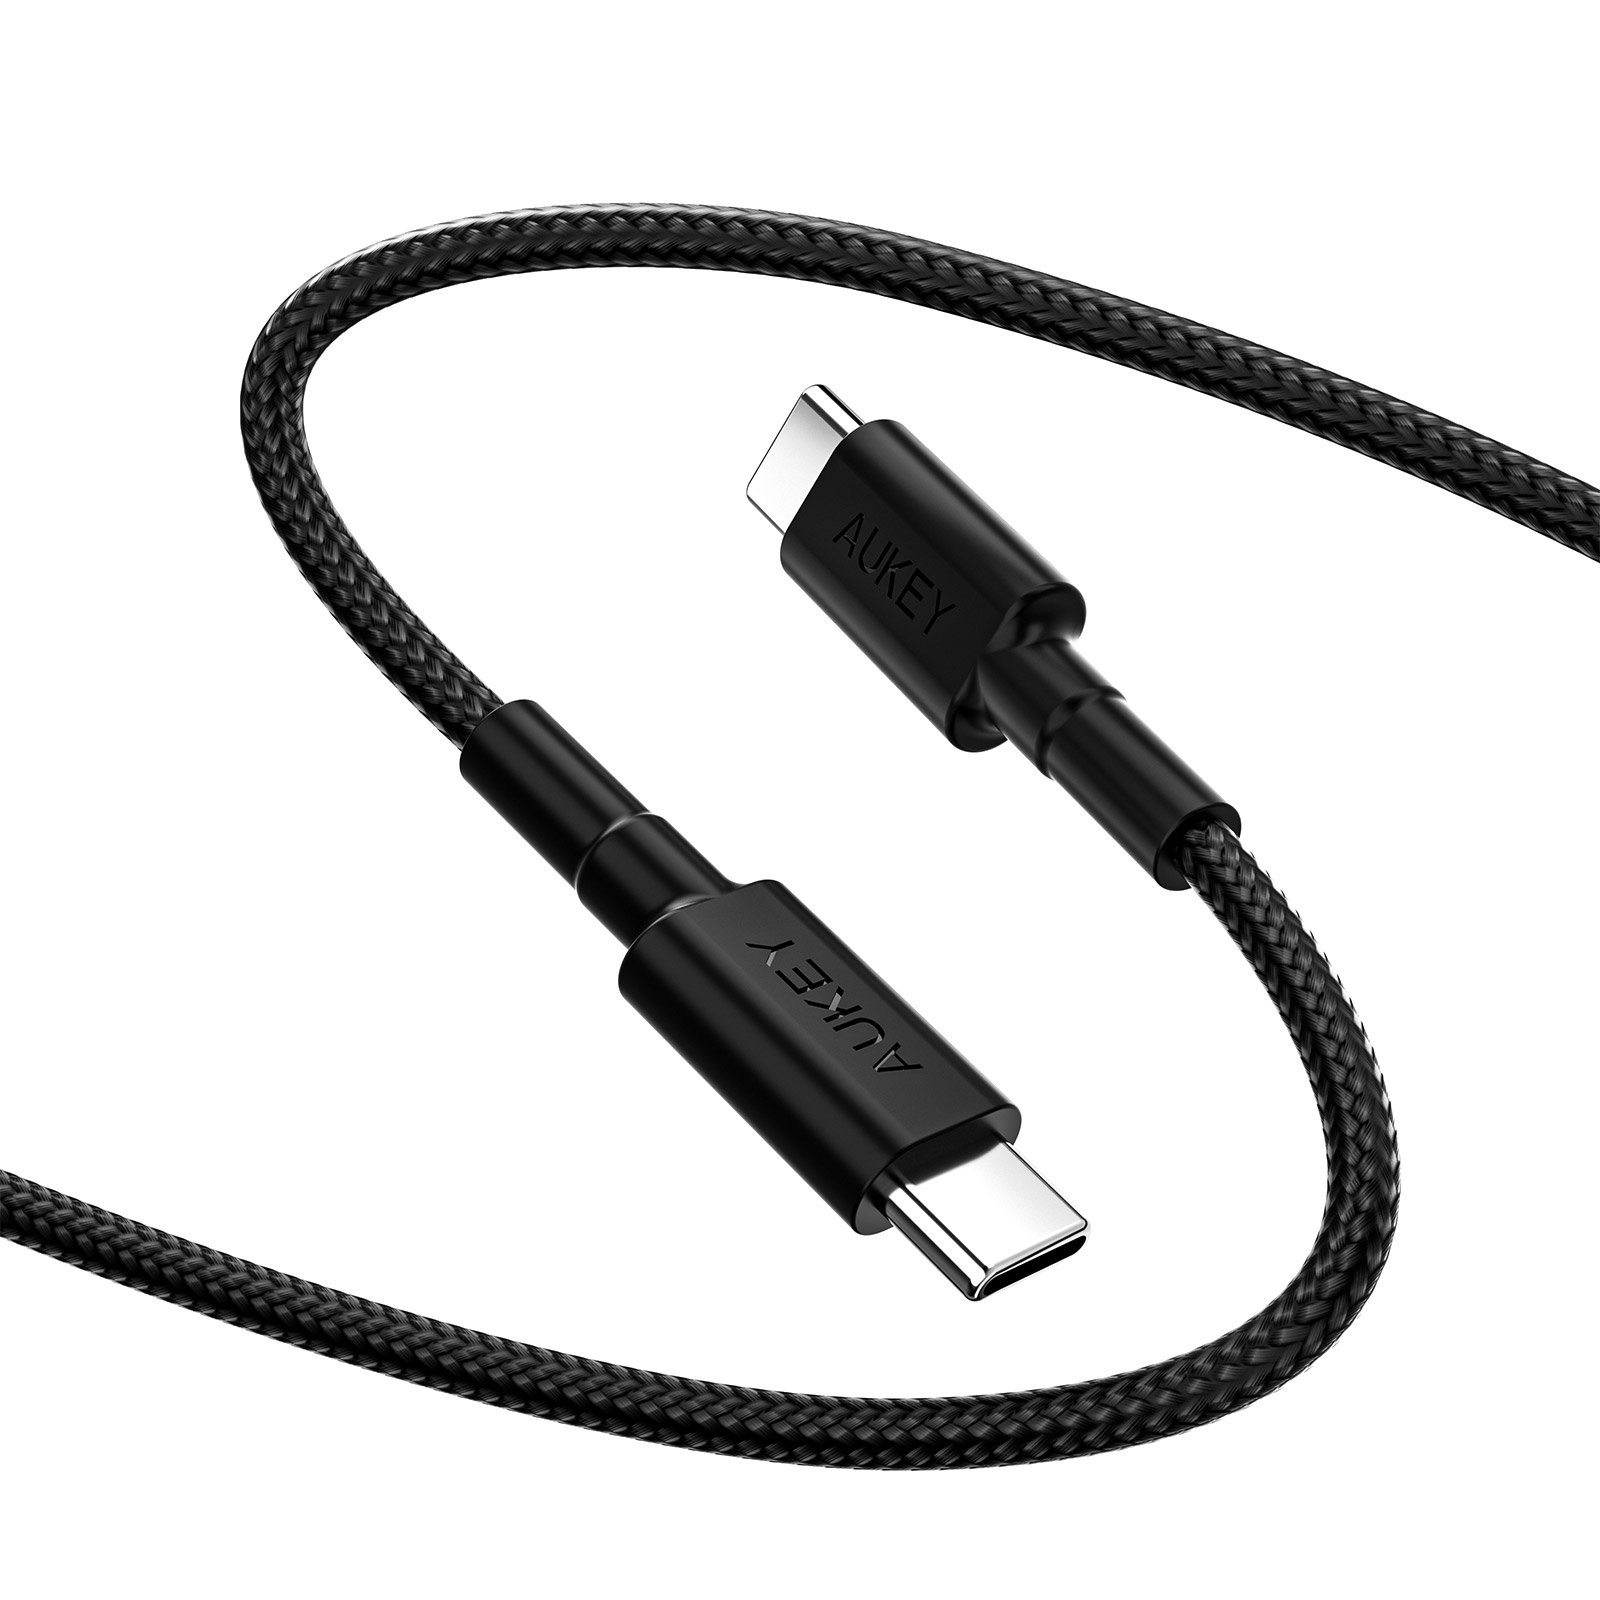 AUKEY　ケーブル Circlet Series ブラック USB-C to Lightning MFi認証済み 急速充電 長さ10cm Black [USB Power Delivery対応]　CB-CL16-BK